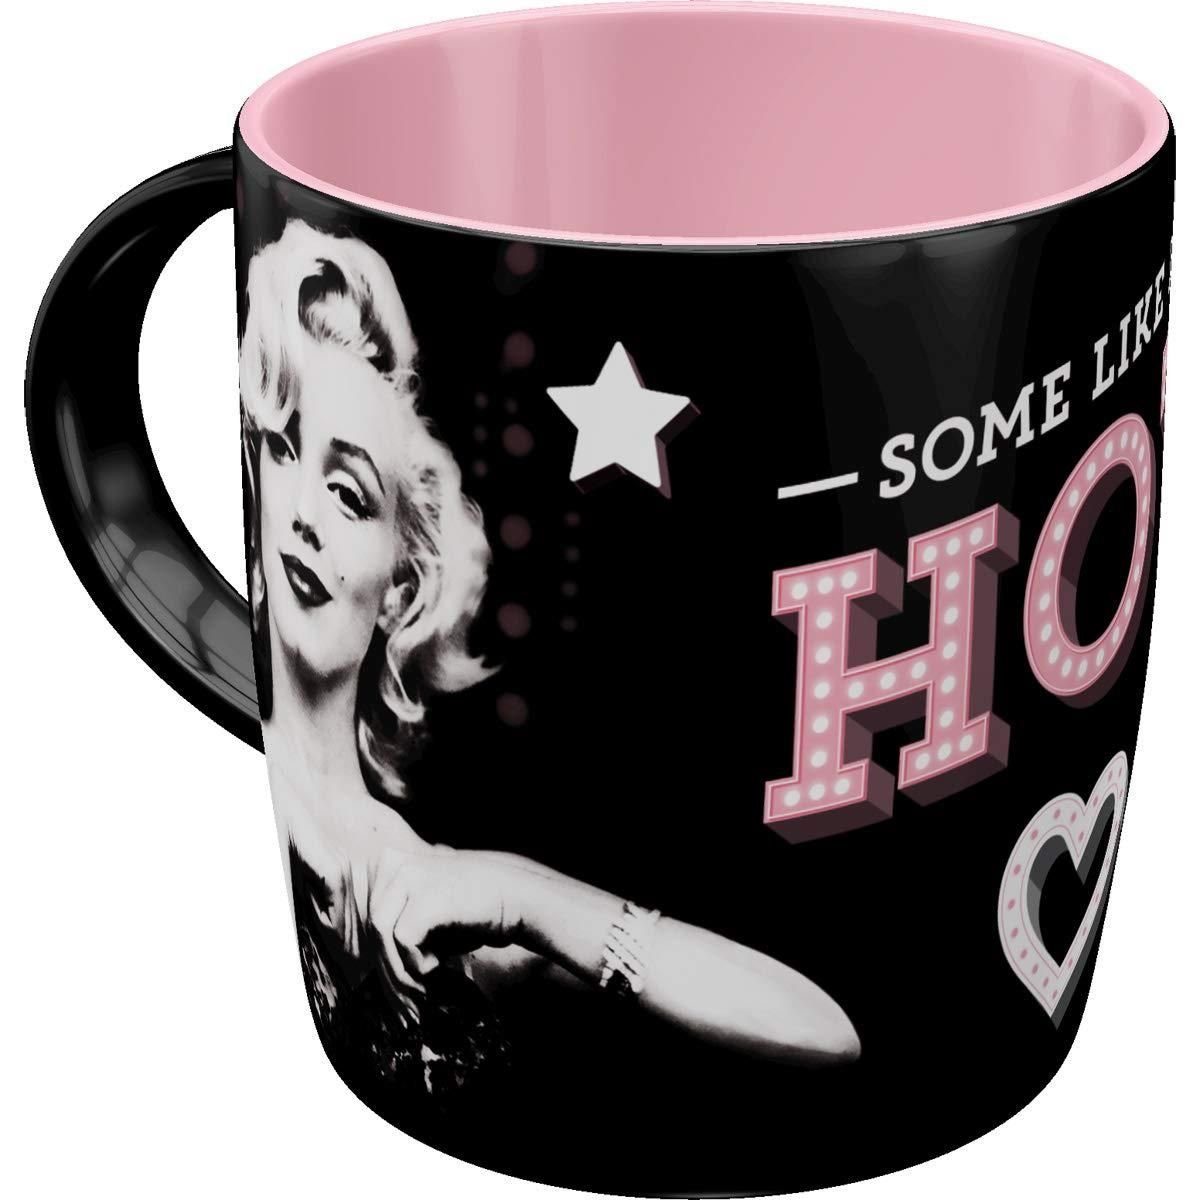 Some Like Kaffeetasse Tasse - Nostalgic-Art - It Hot Marilyn Celebrities Monroe